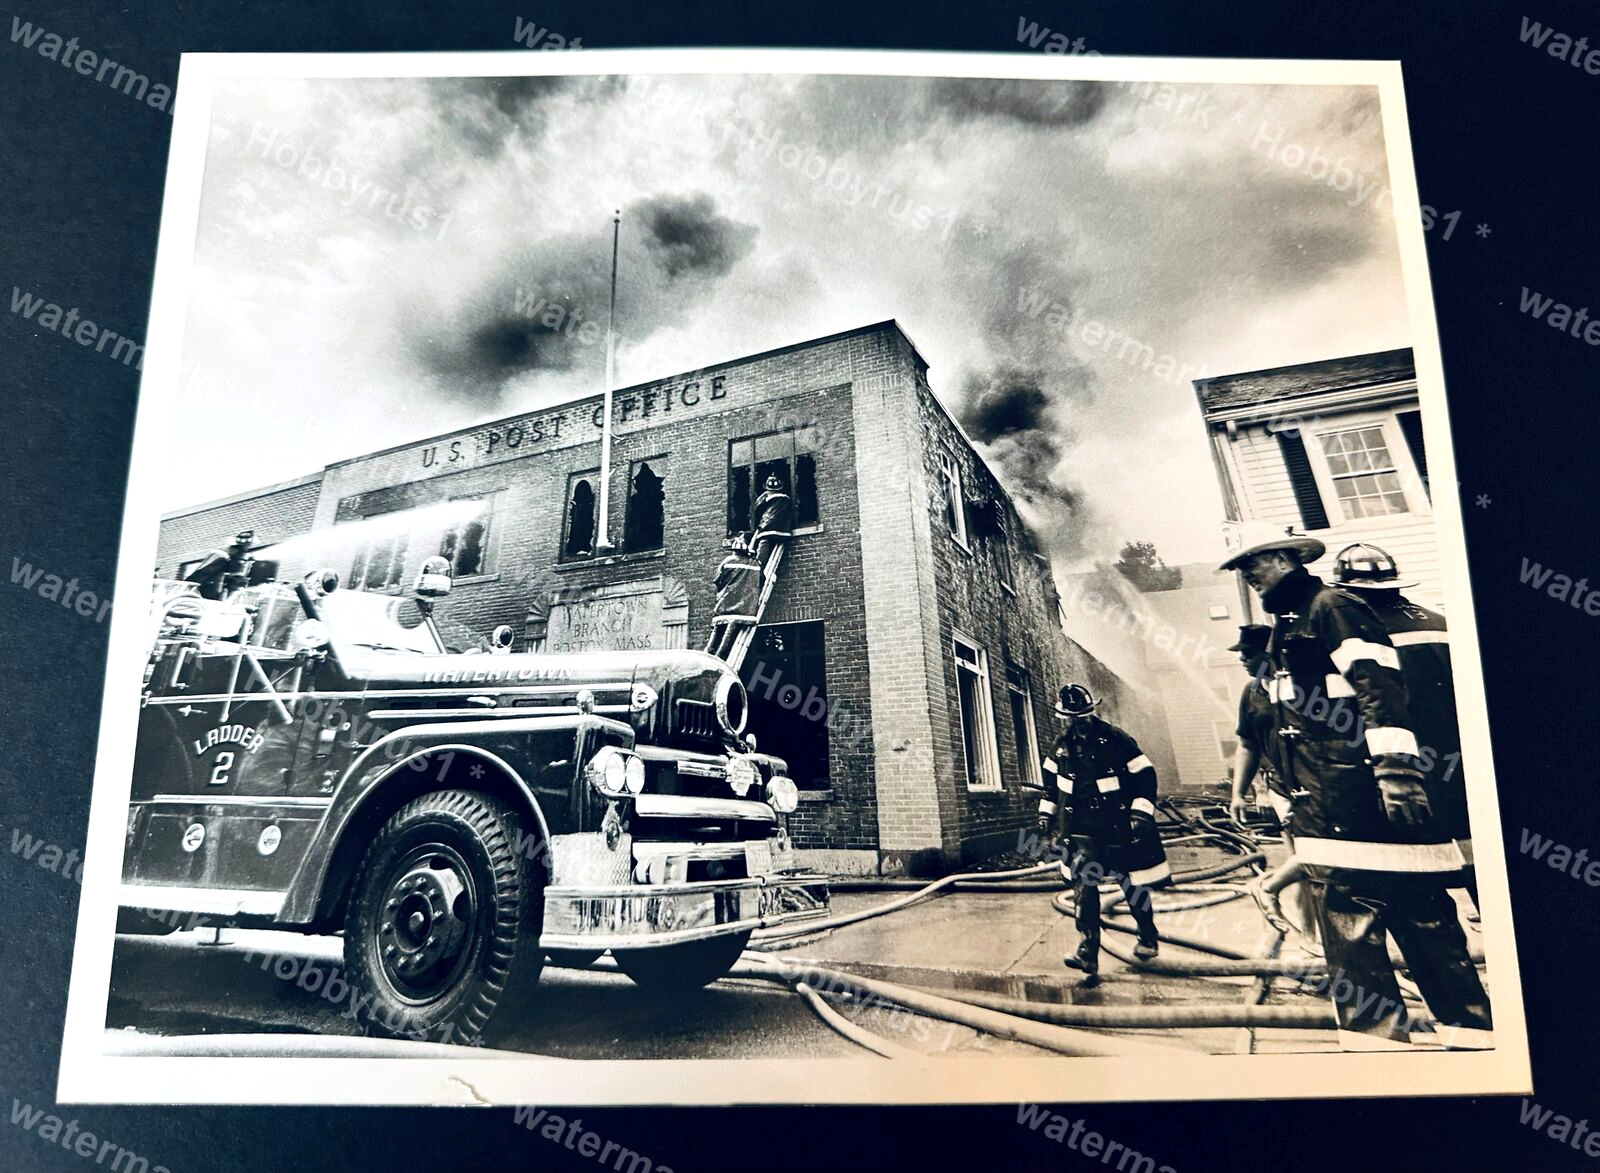 Fire Department Firemen Fire Trucks US Post Office Watertown MA 1987 Press Photo